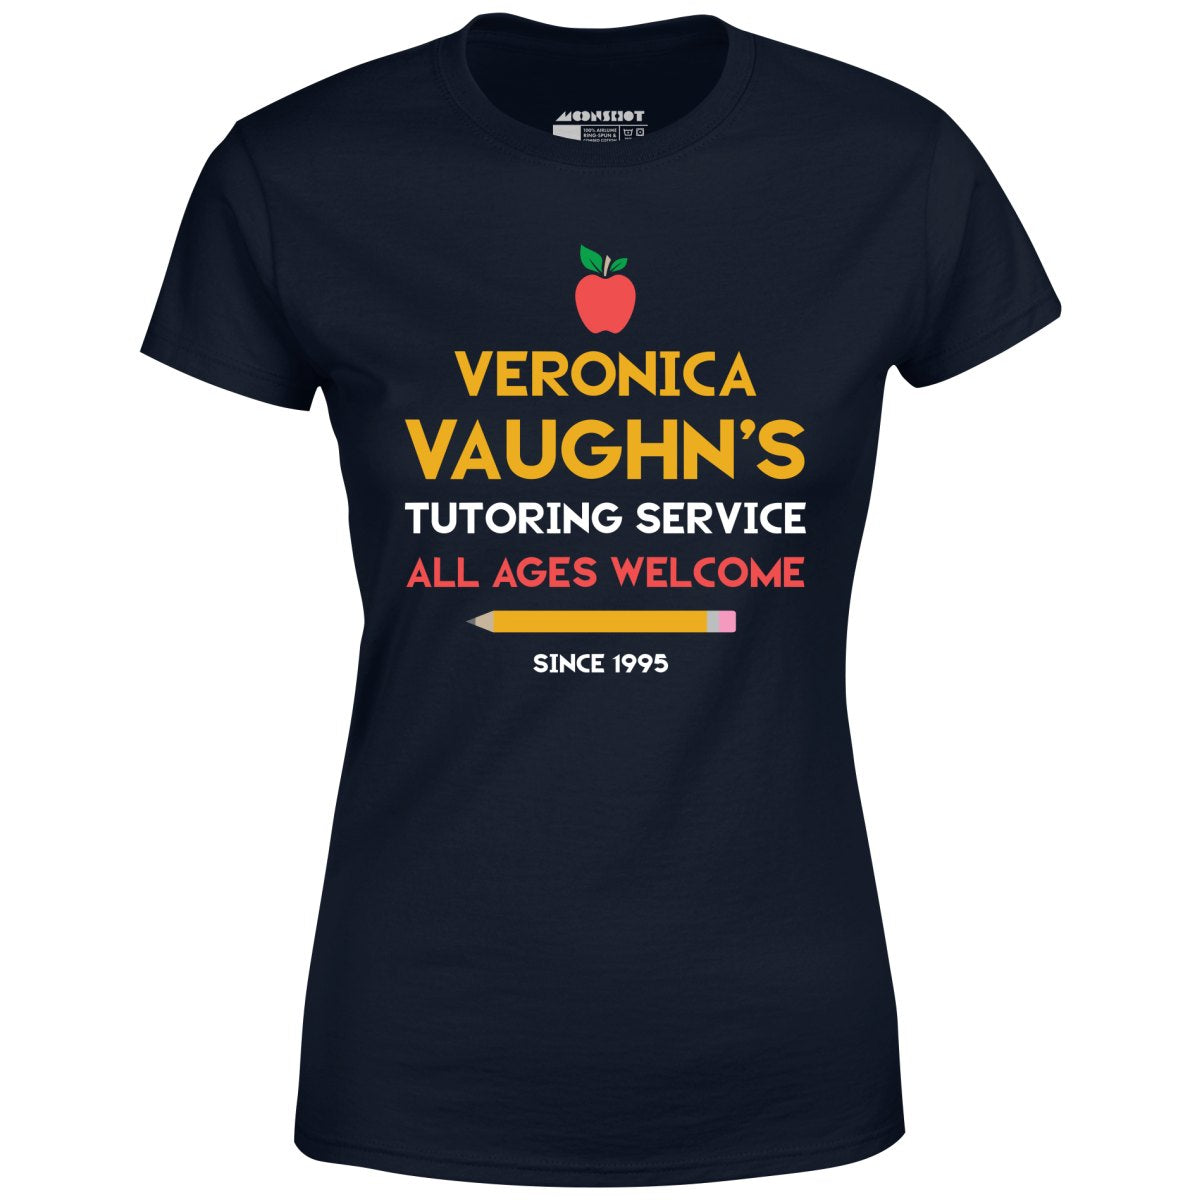 Veronica Vaughn's Tutoring Service - Women's T-Shirt